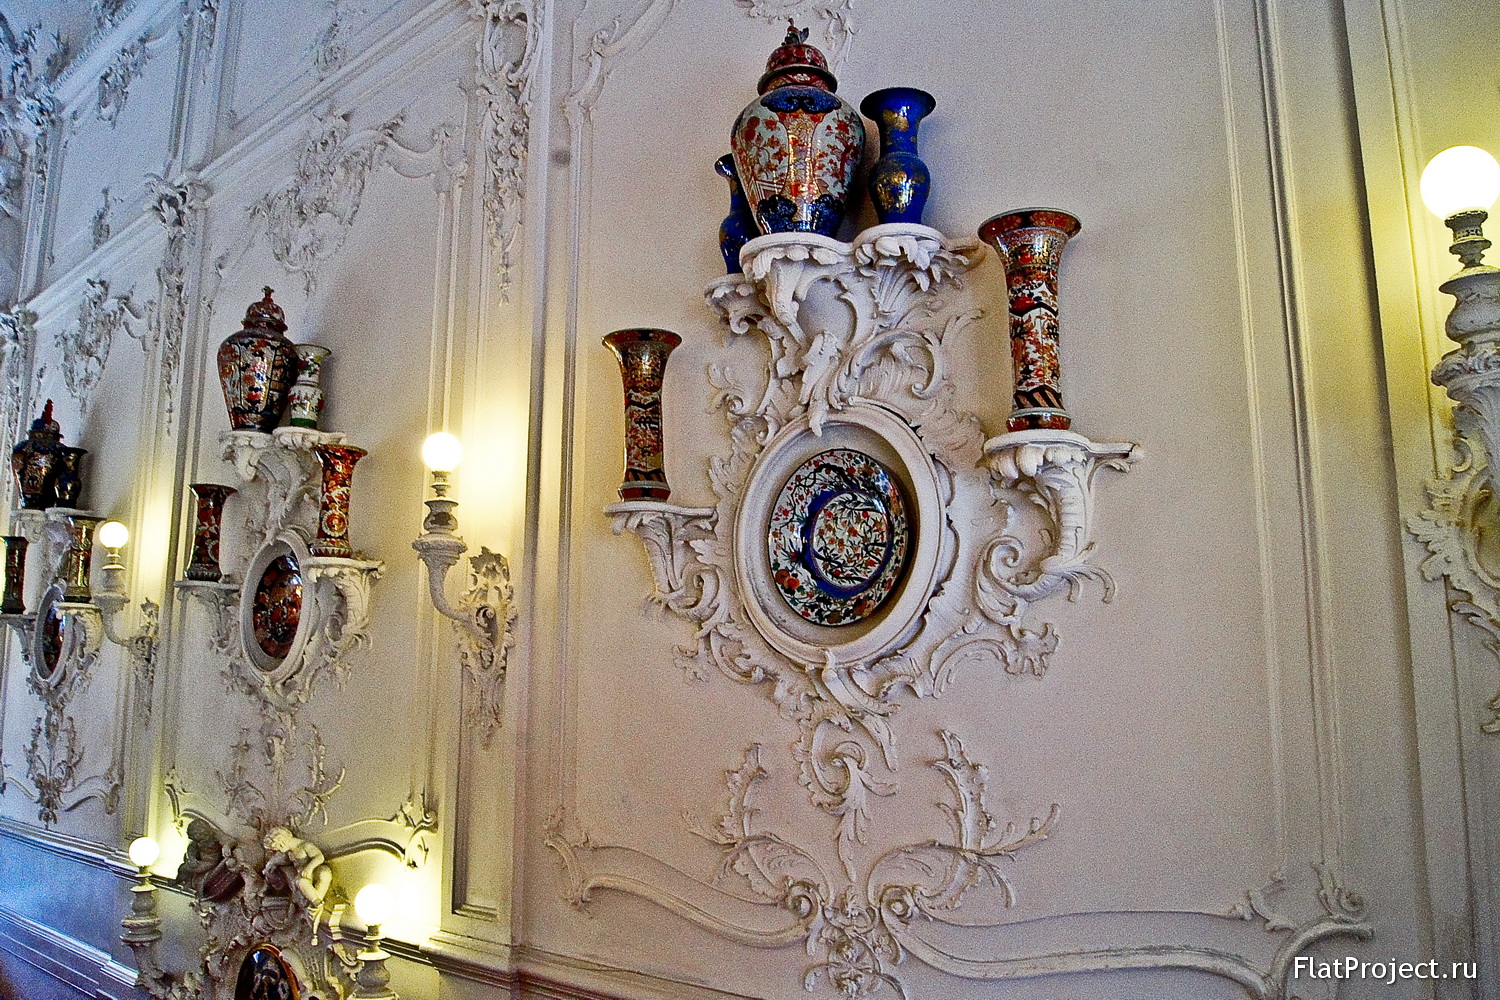 The Catherine Palace interiors – photo 11